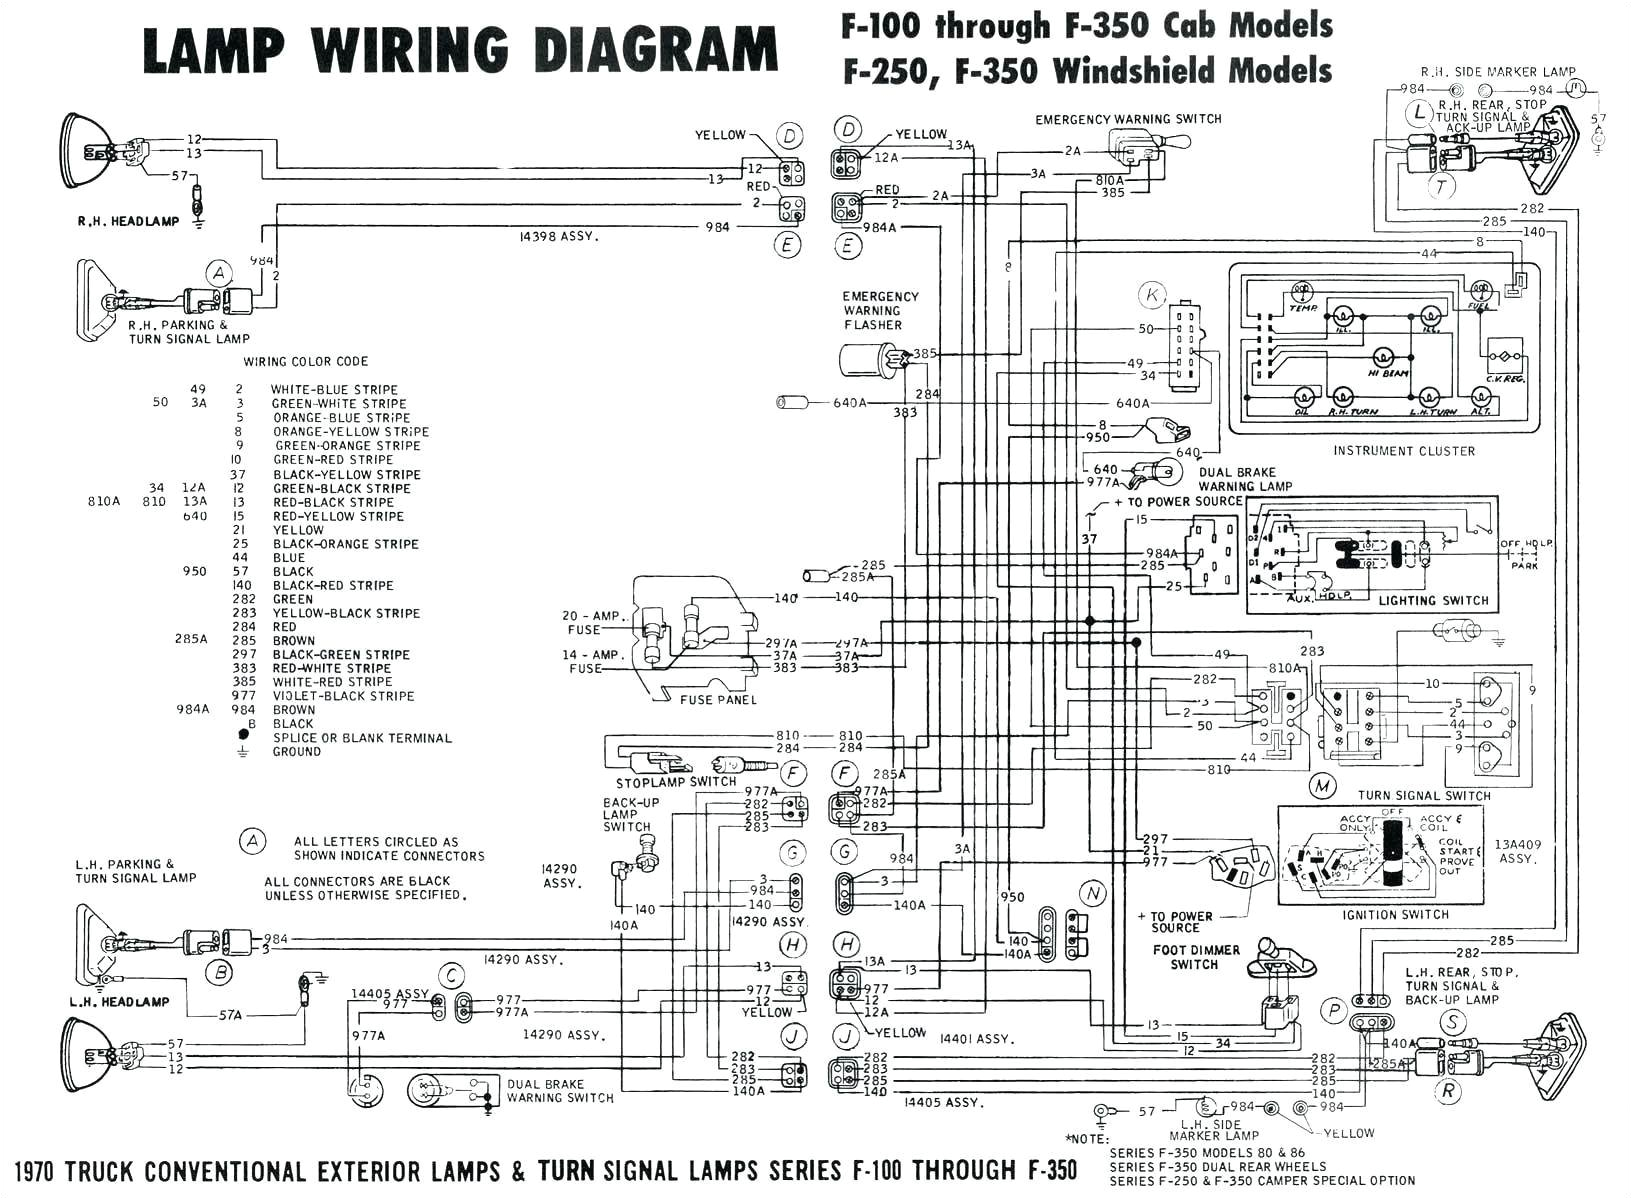 09 audi a4 quattro front headlight wiring diagram